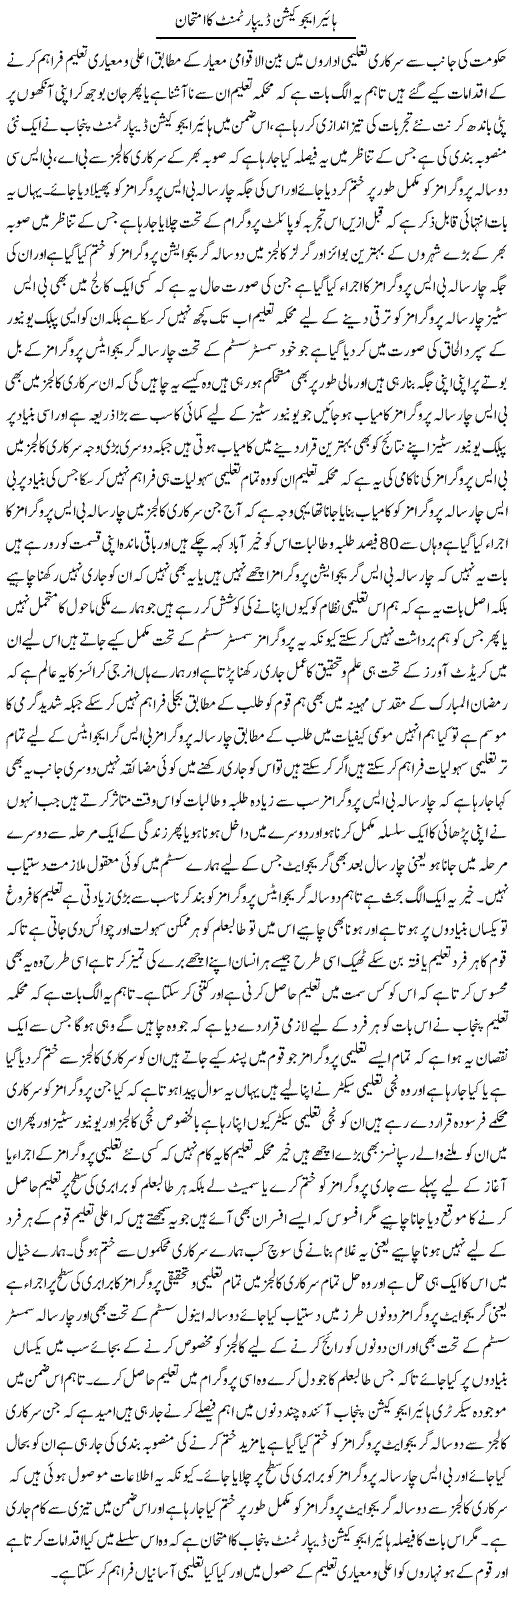 Higher Education Department Ka Imtehan | Yousaf Abbasi | Daily Urdu Columns